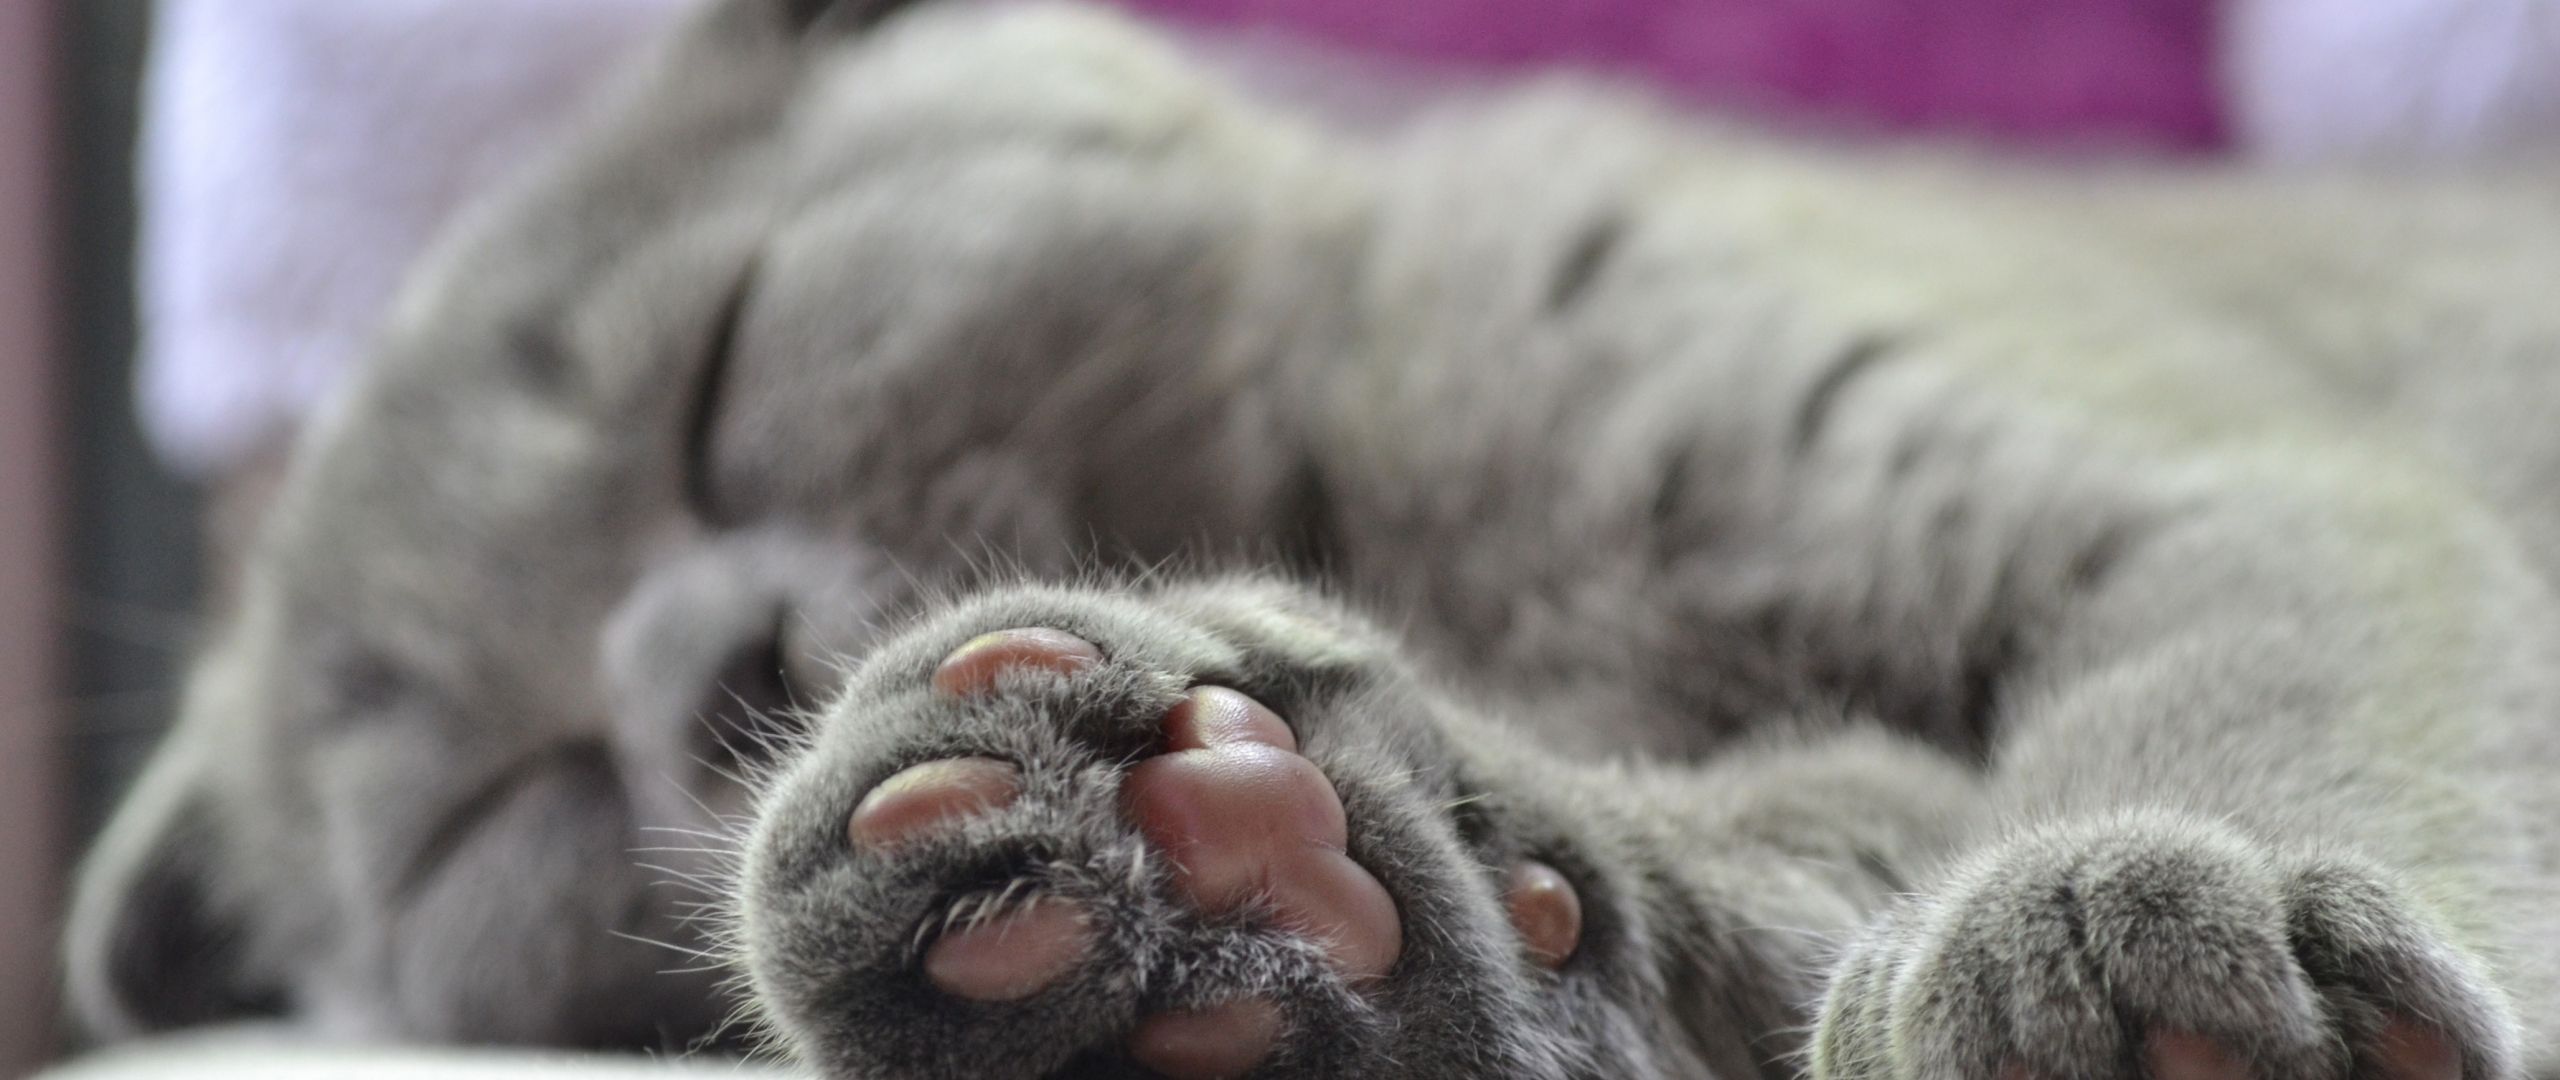 Desktop Wallpaper Cat's Paw, Sleep, Pet, HD Image, Picture, Background, Q5qxph